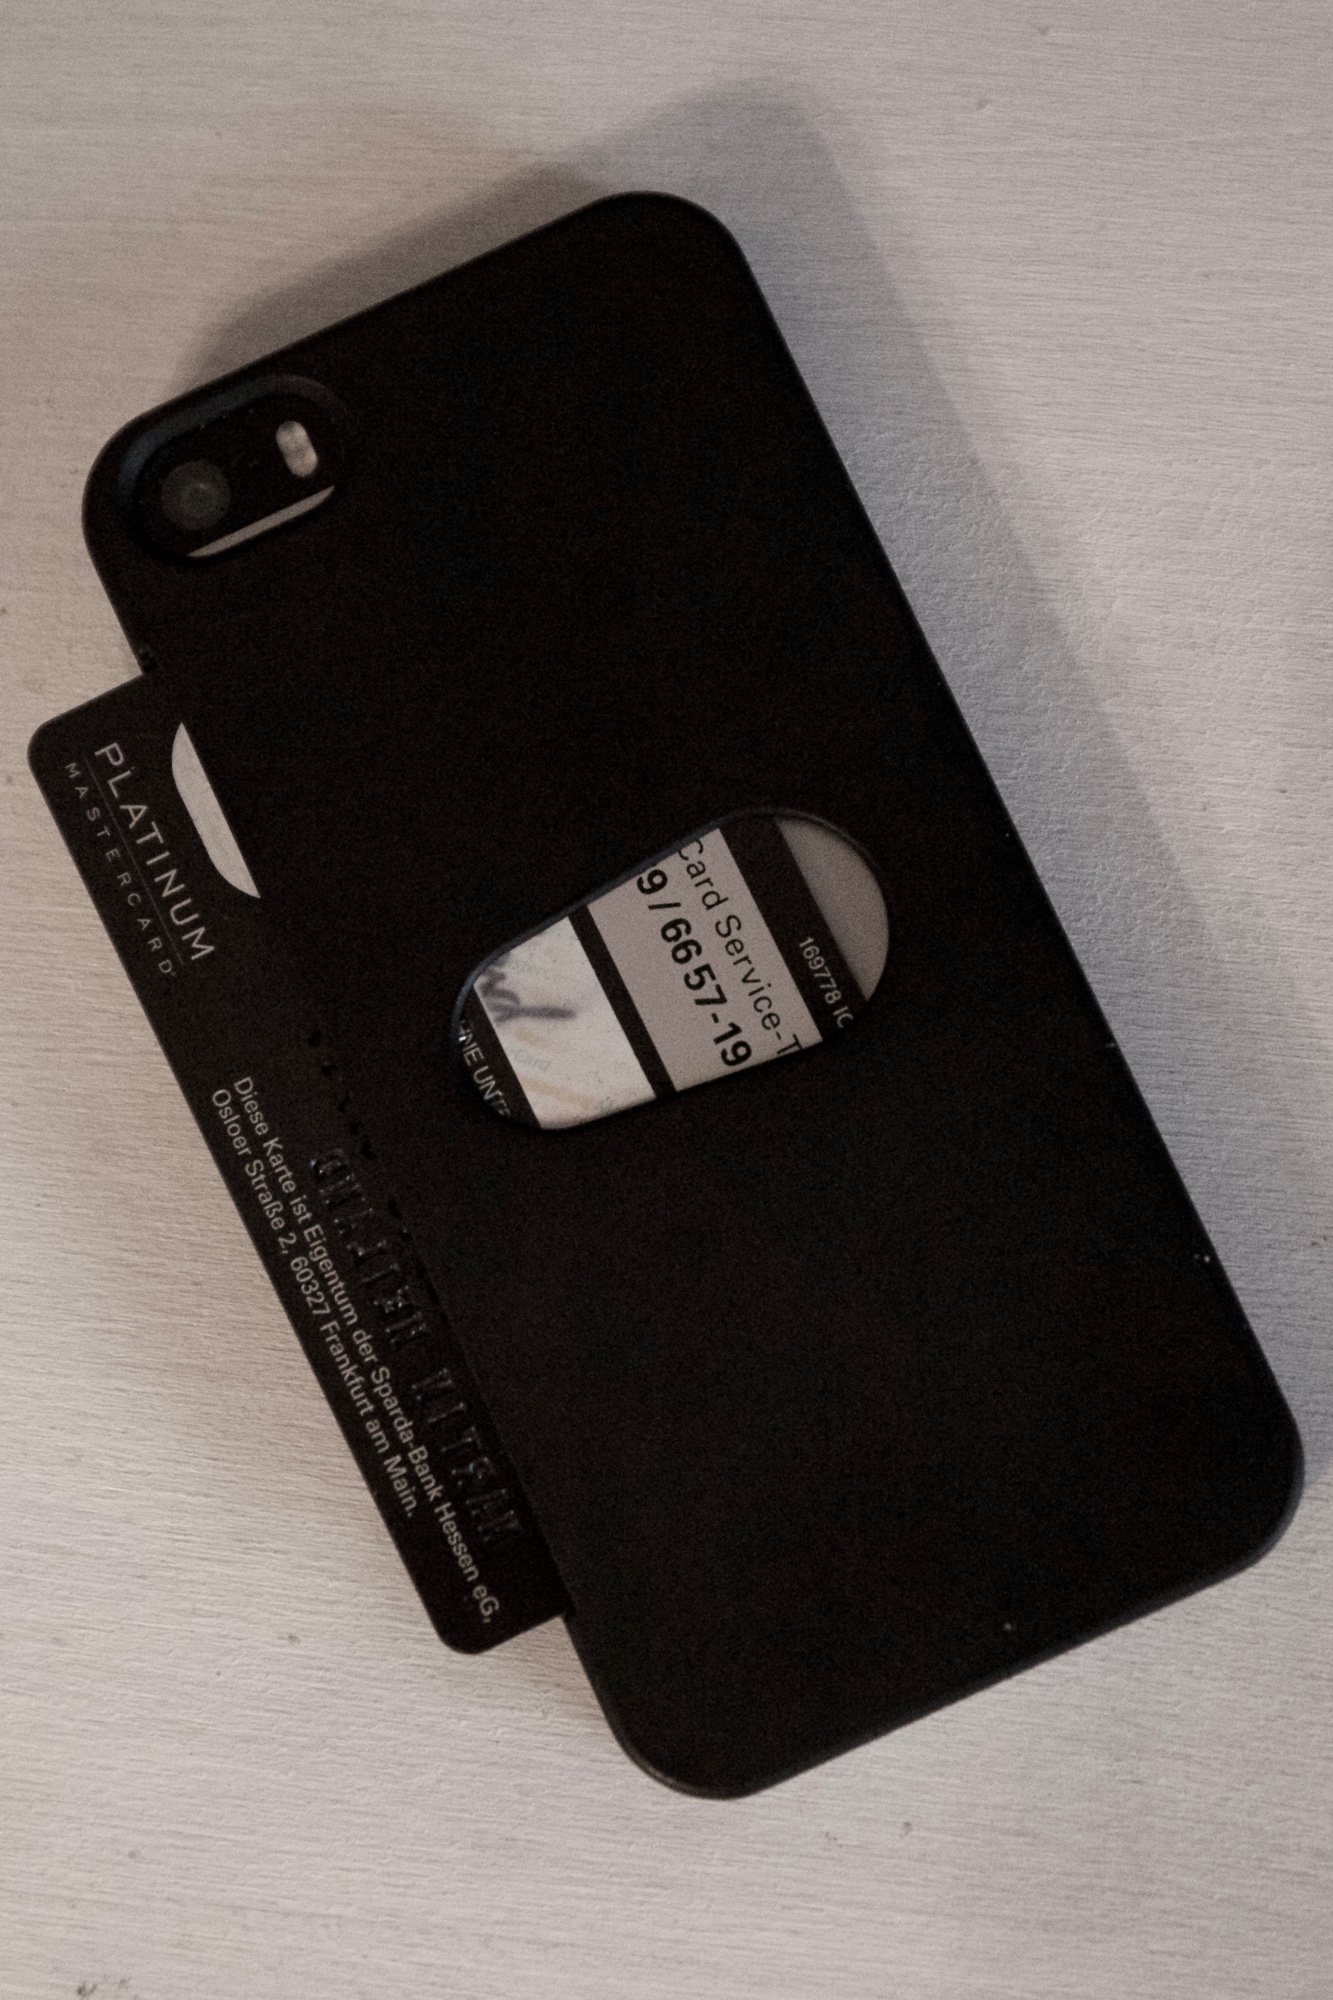 iPhone SE credit card case